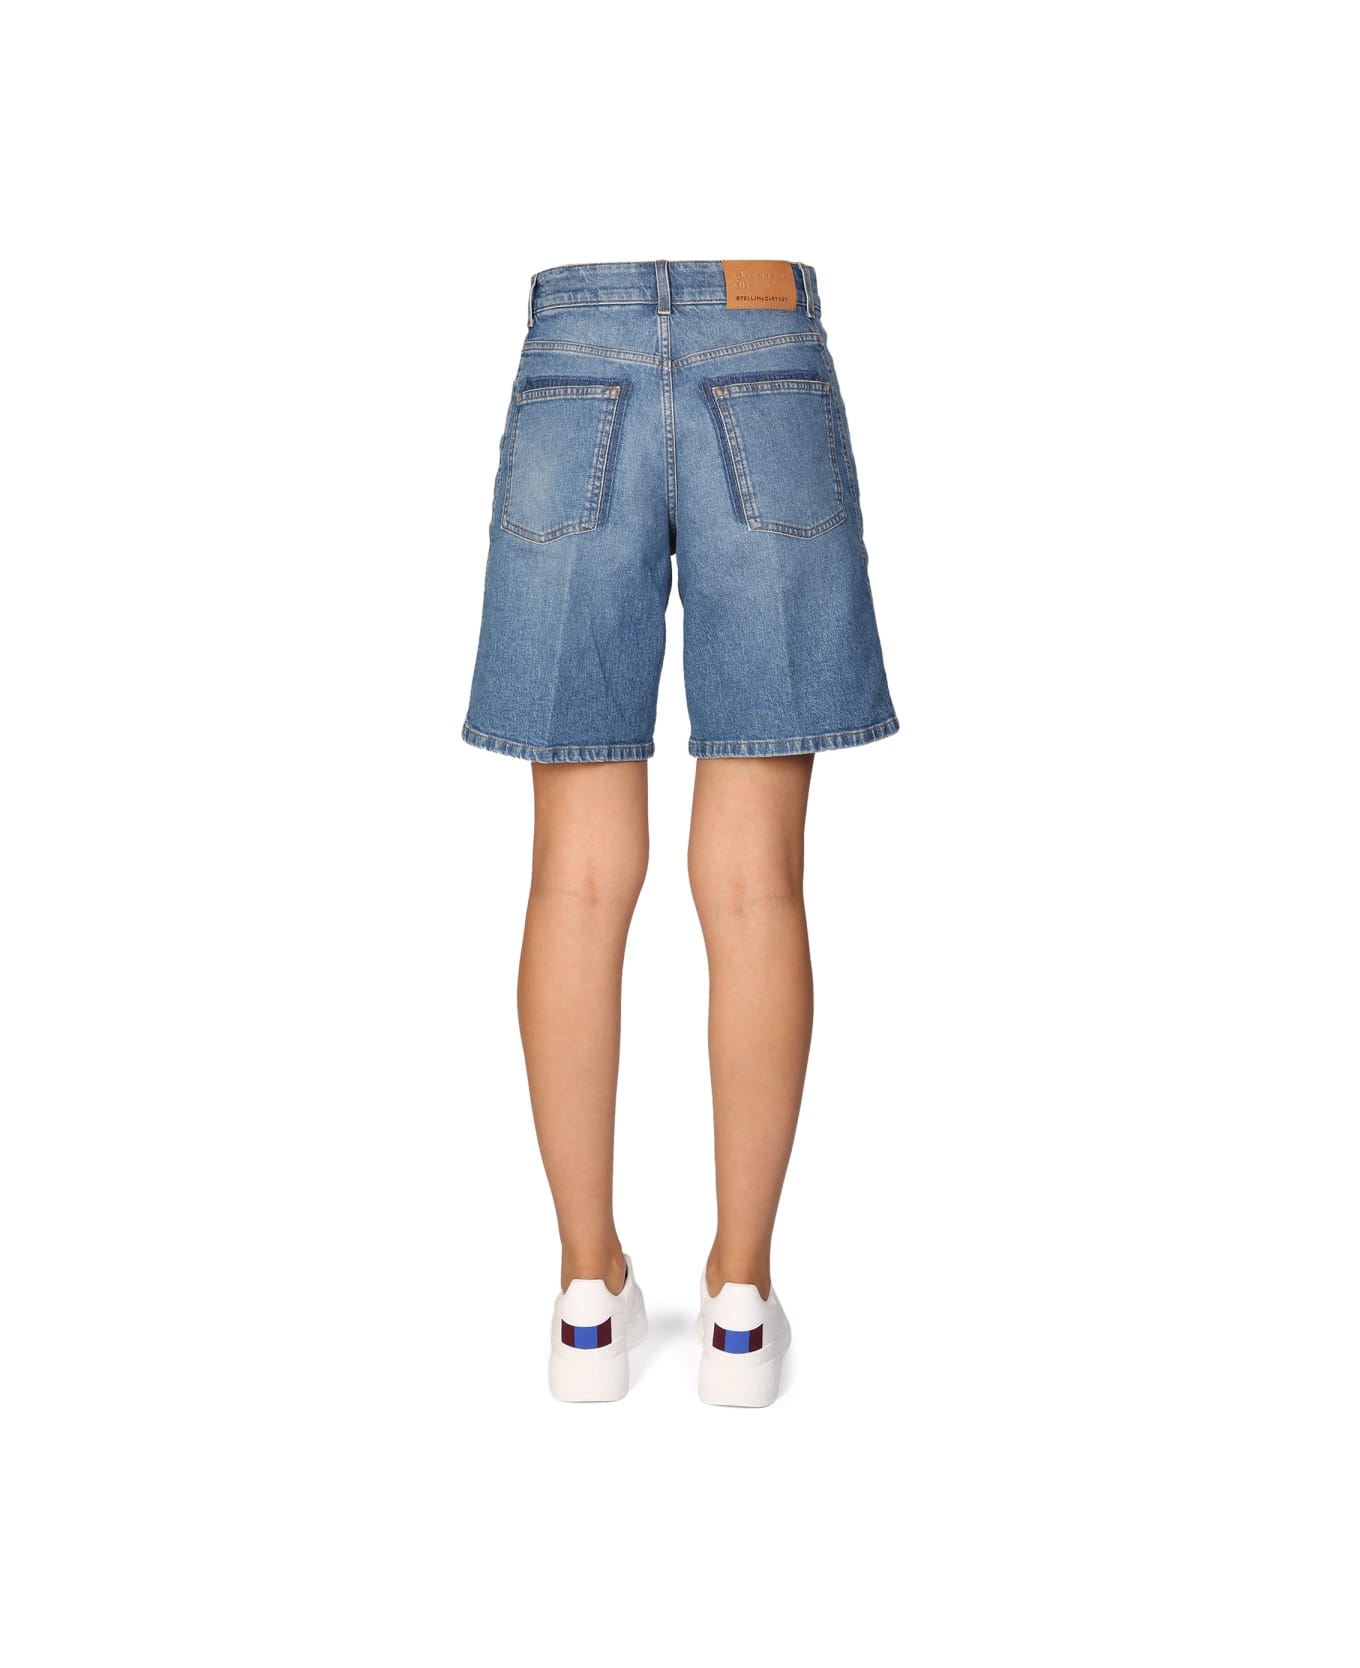 Stella McCartney Denim Shorts - BLUE